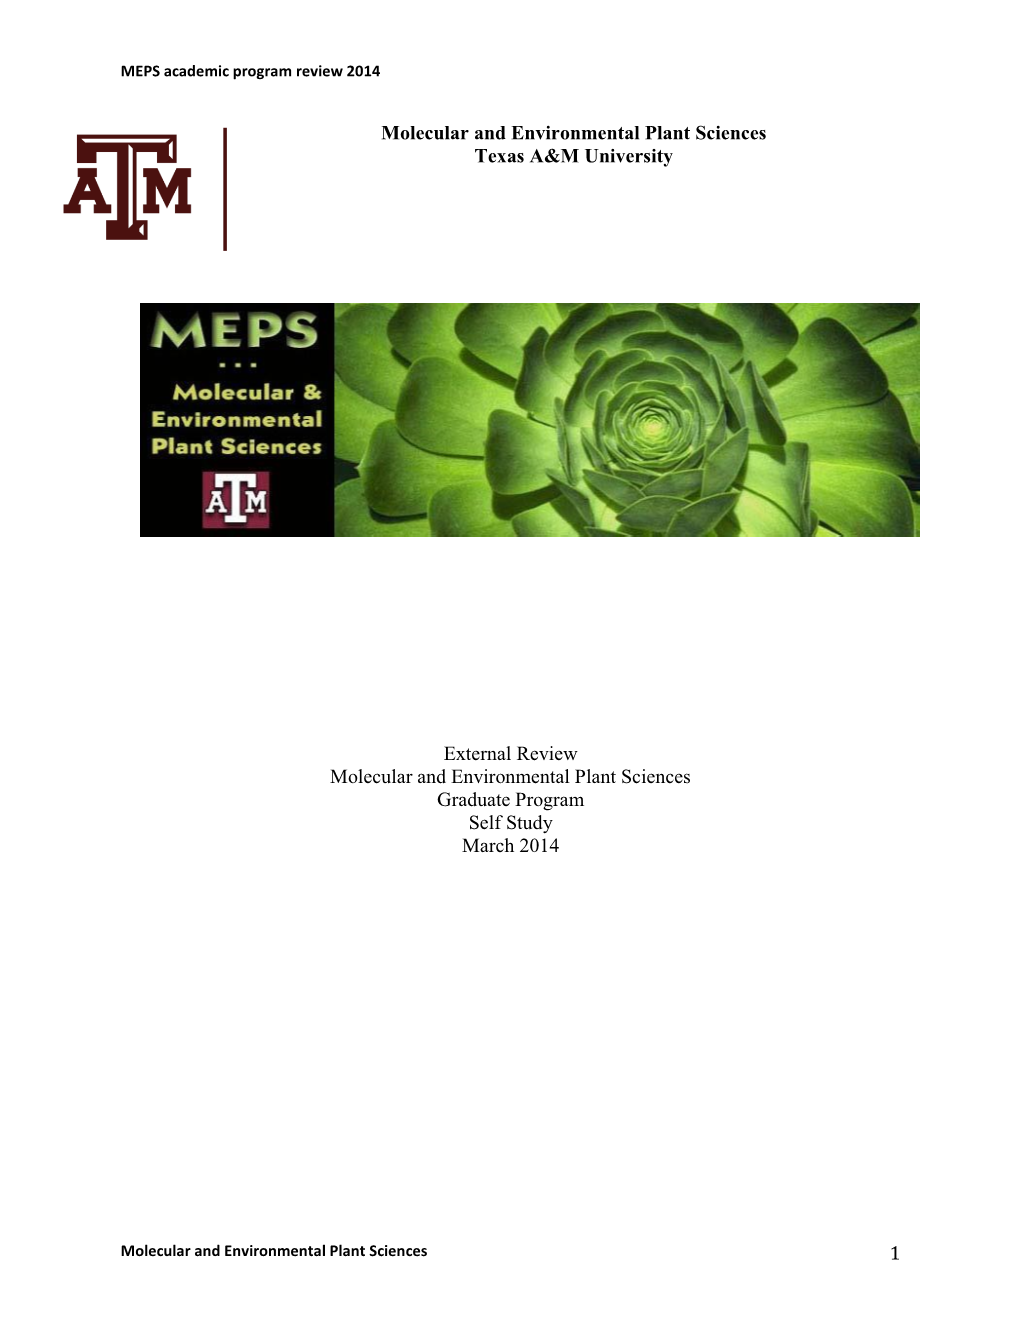 1 Molecular and Environmental Plant Sciences Texas A&M University